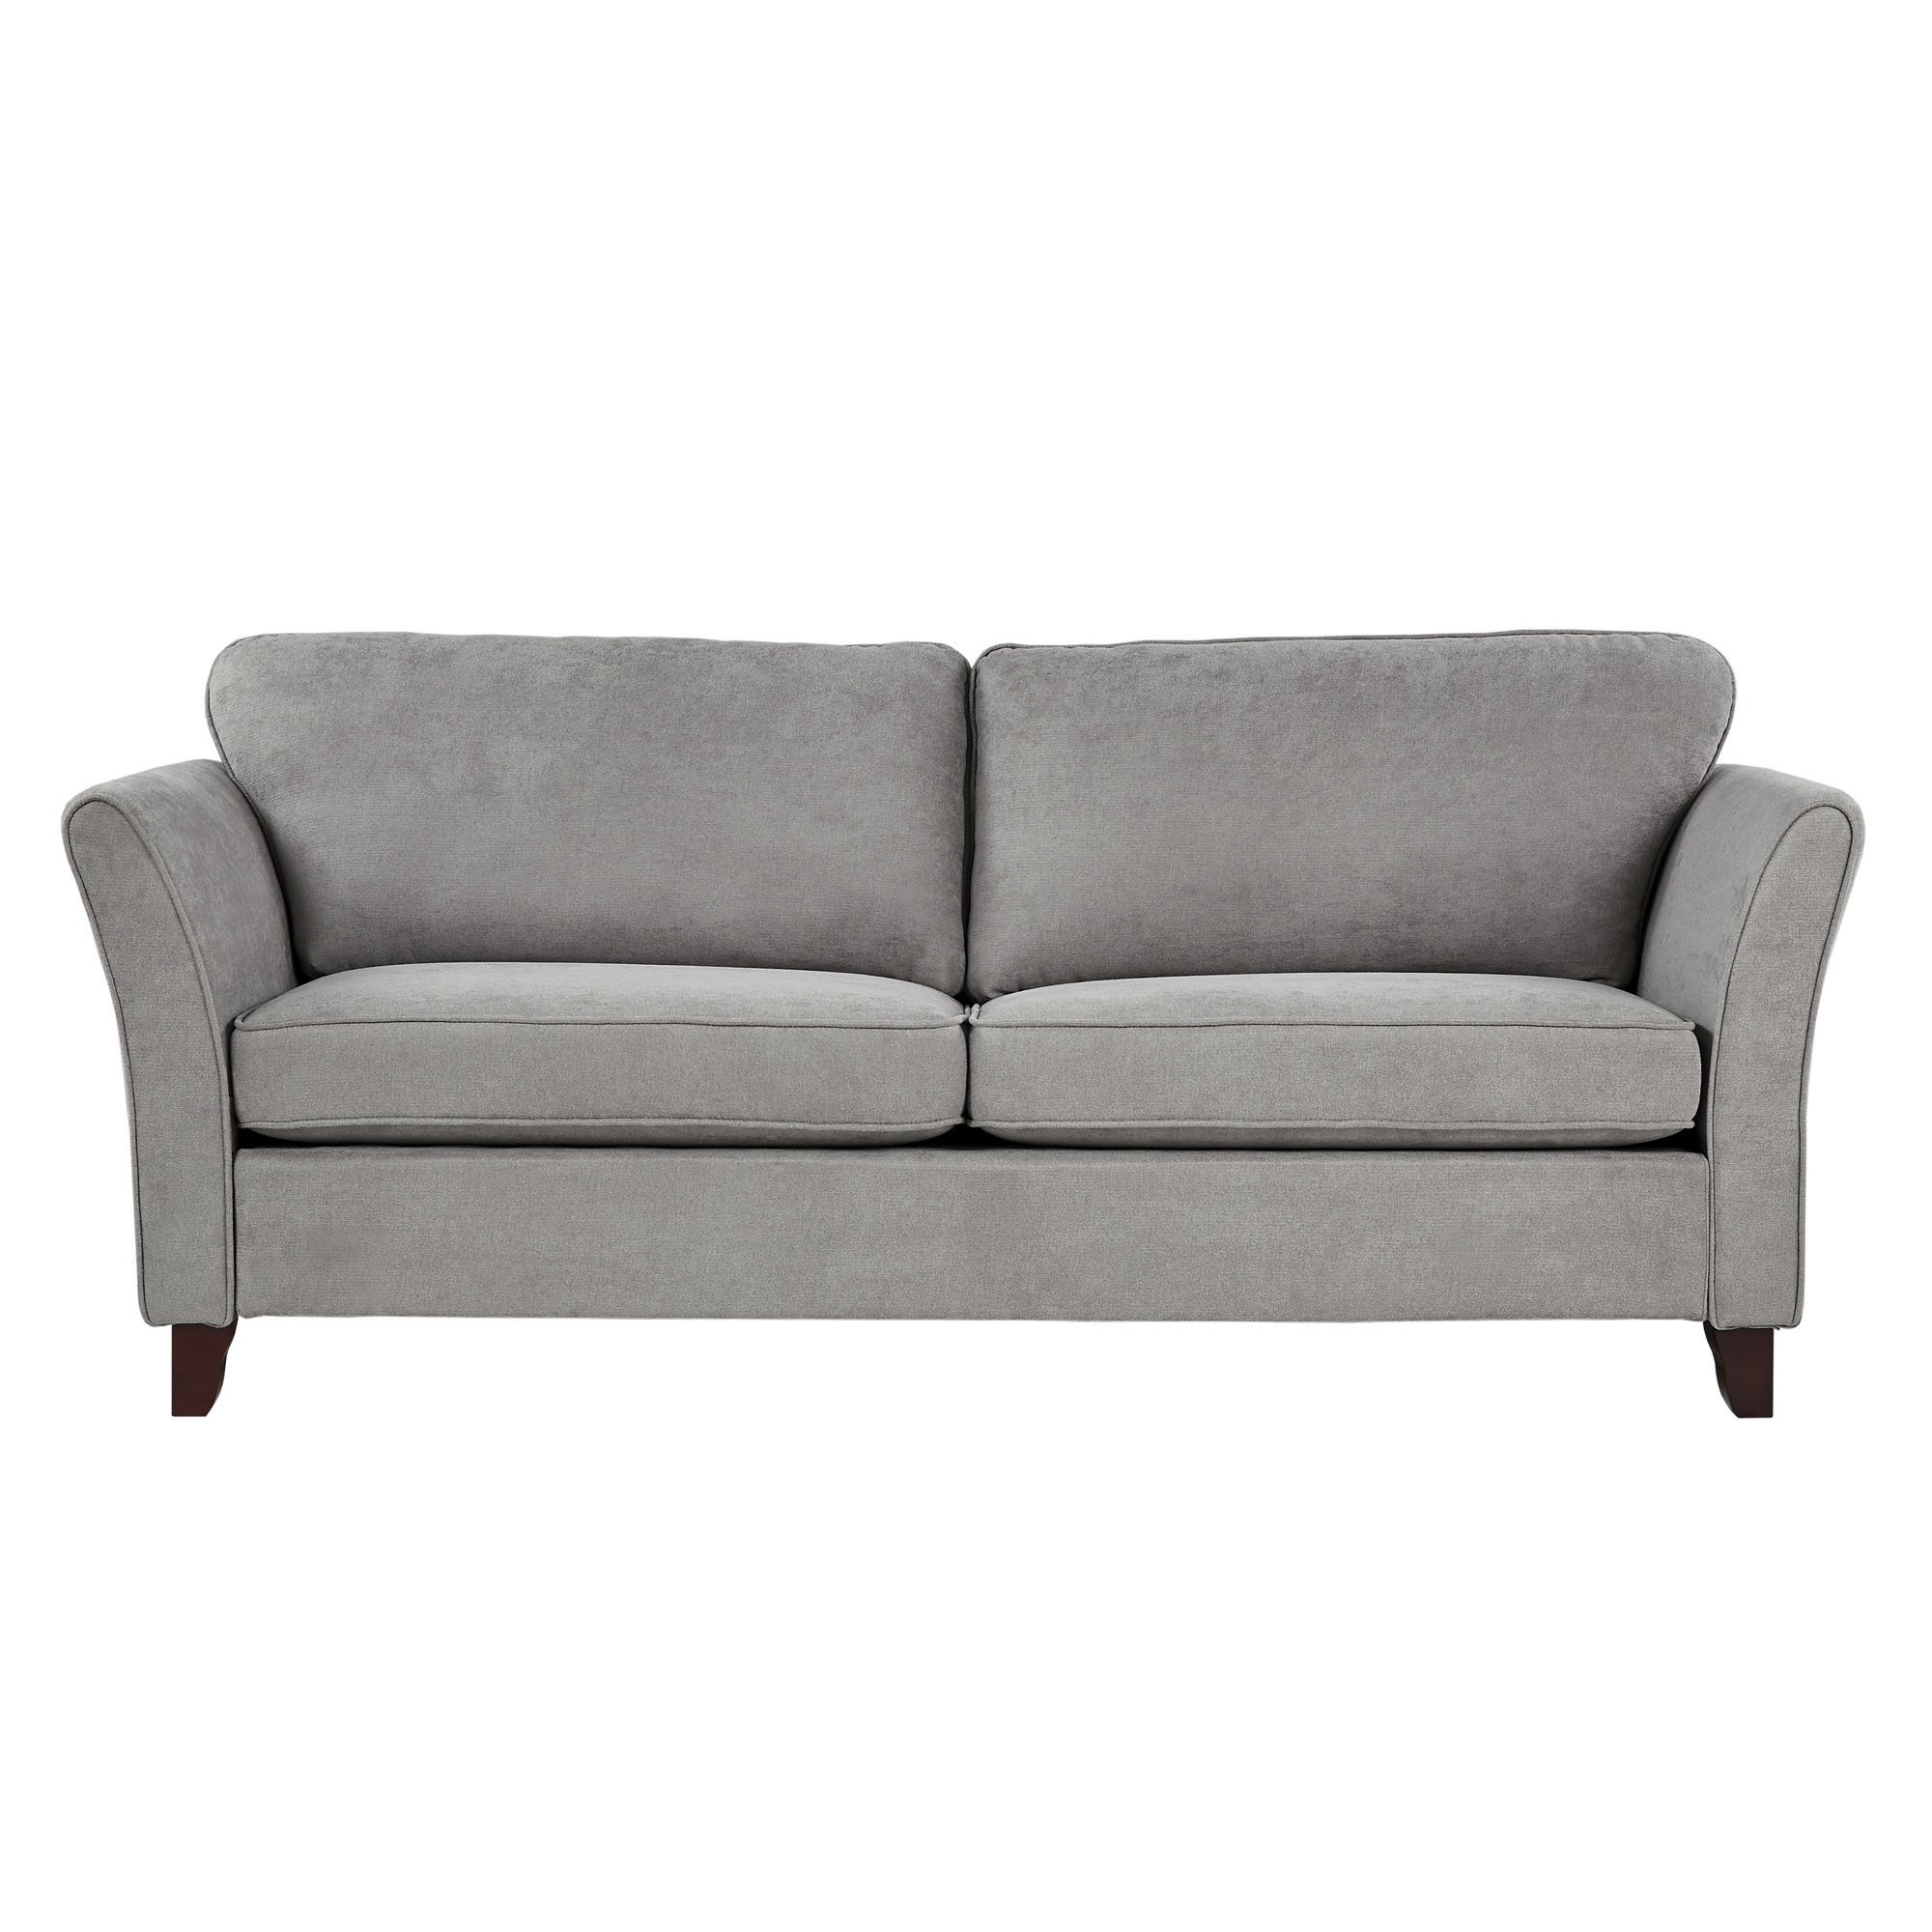 Kingbird Furniture Company Brand 30 Sets 30 Sets Sofa L 30 Sets Factory 7